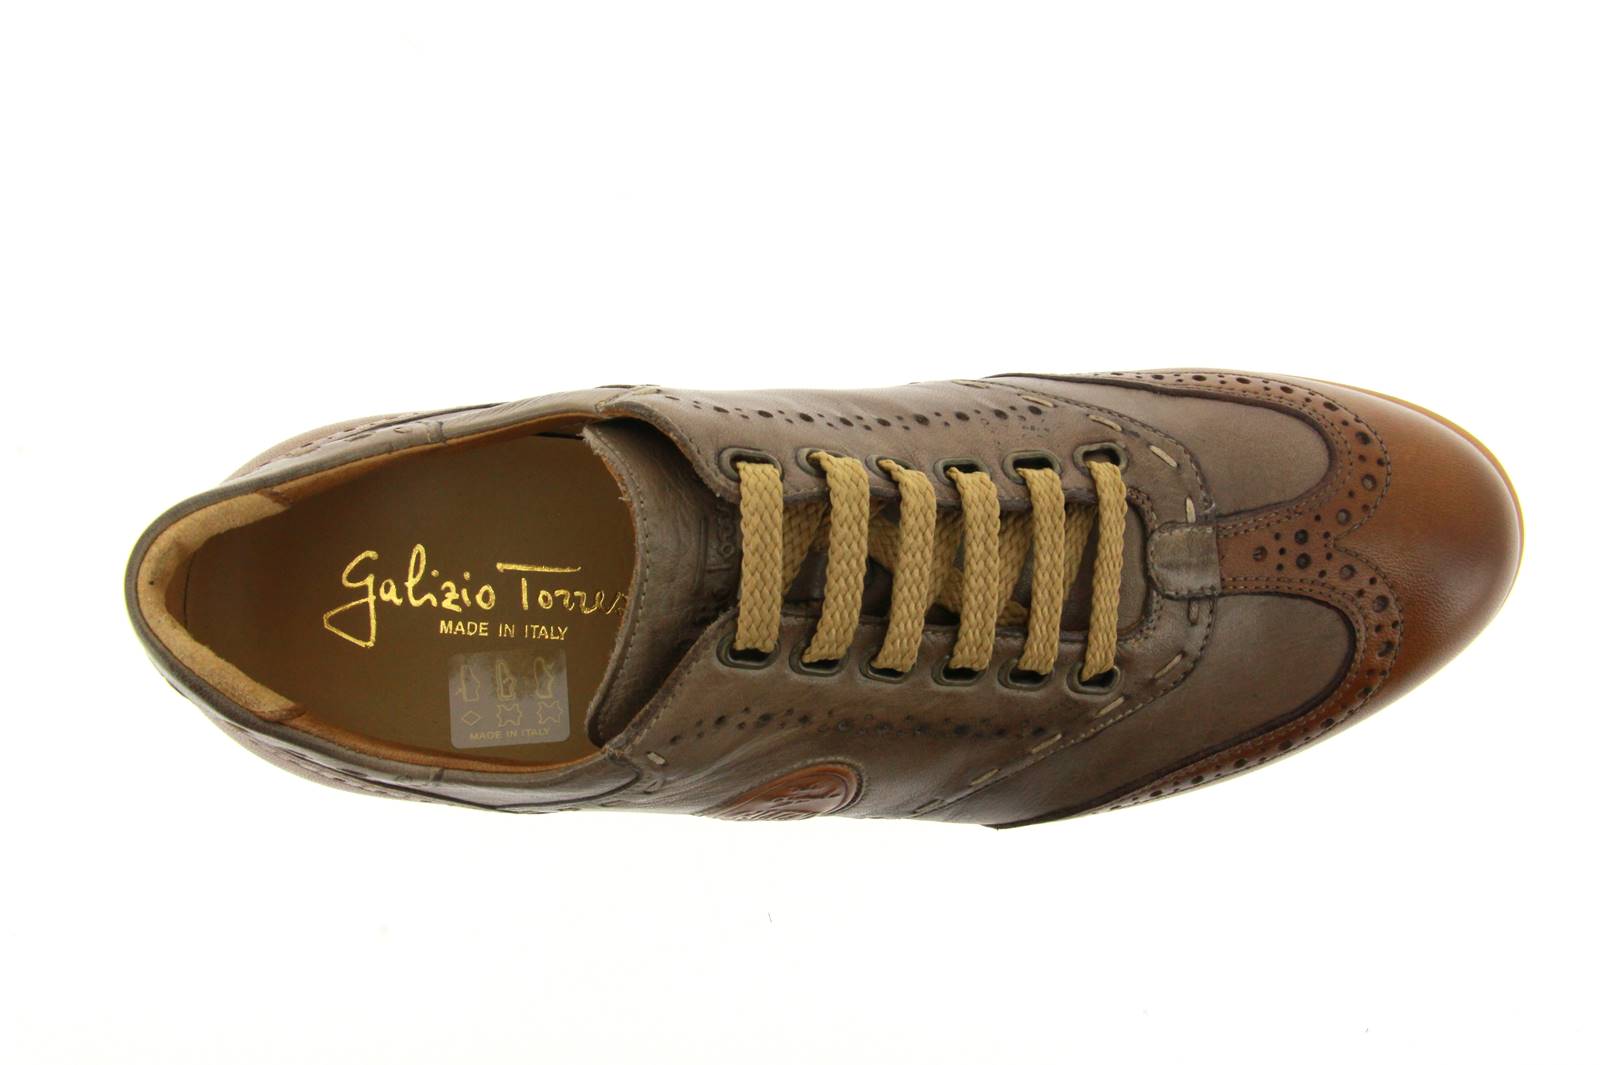 Galizio Toressi Sneaker FOULARD MARRONE TAUPE (46)